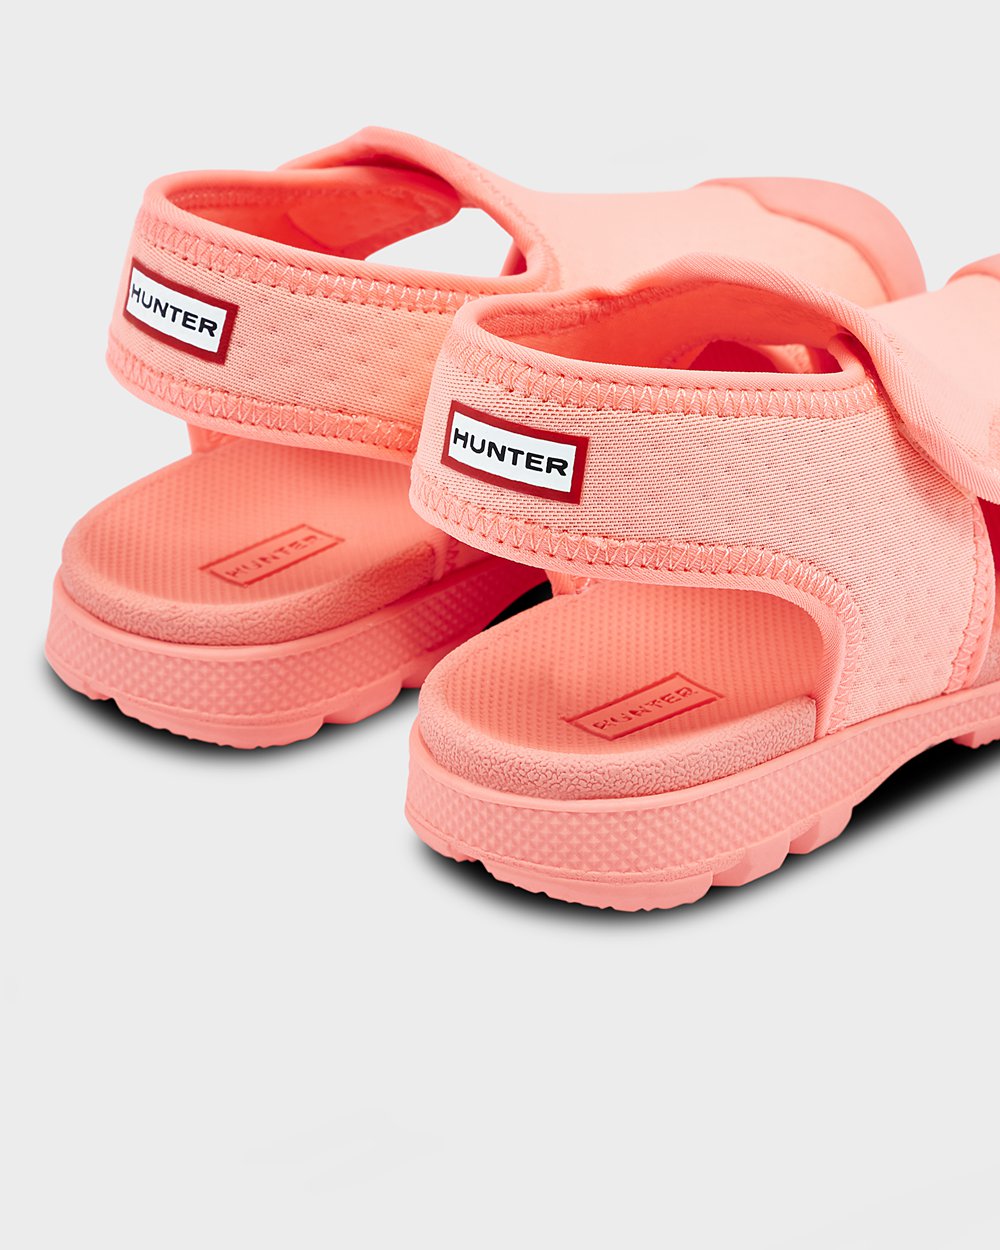 Kids Sandals - Hunter Original Little Outdoor Walking (54EGLVTKW) - Pink